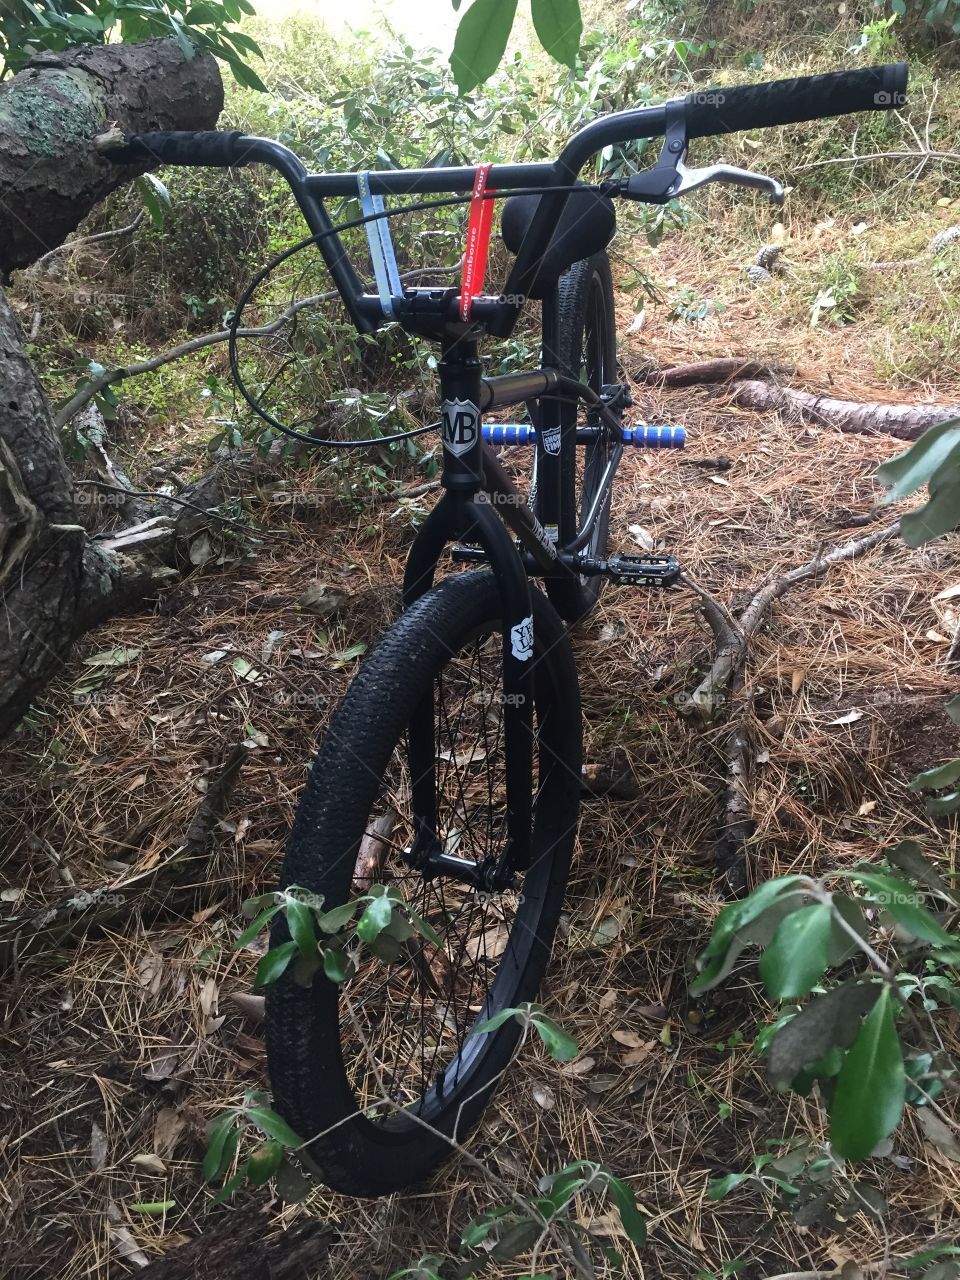 BMX Bike Off Roading / Mountain Biking